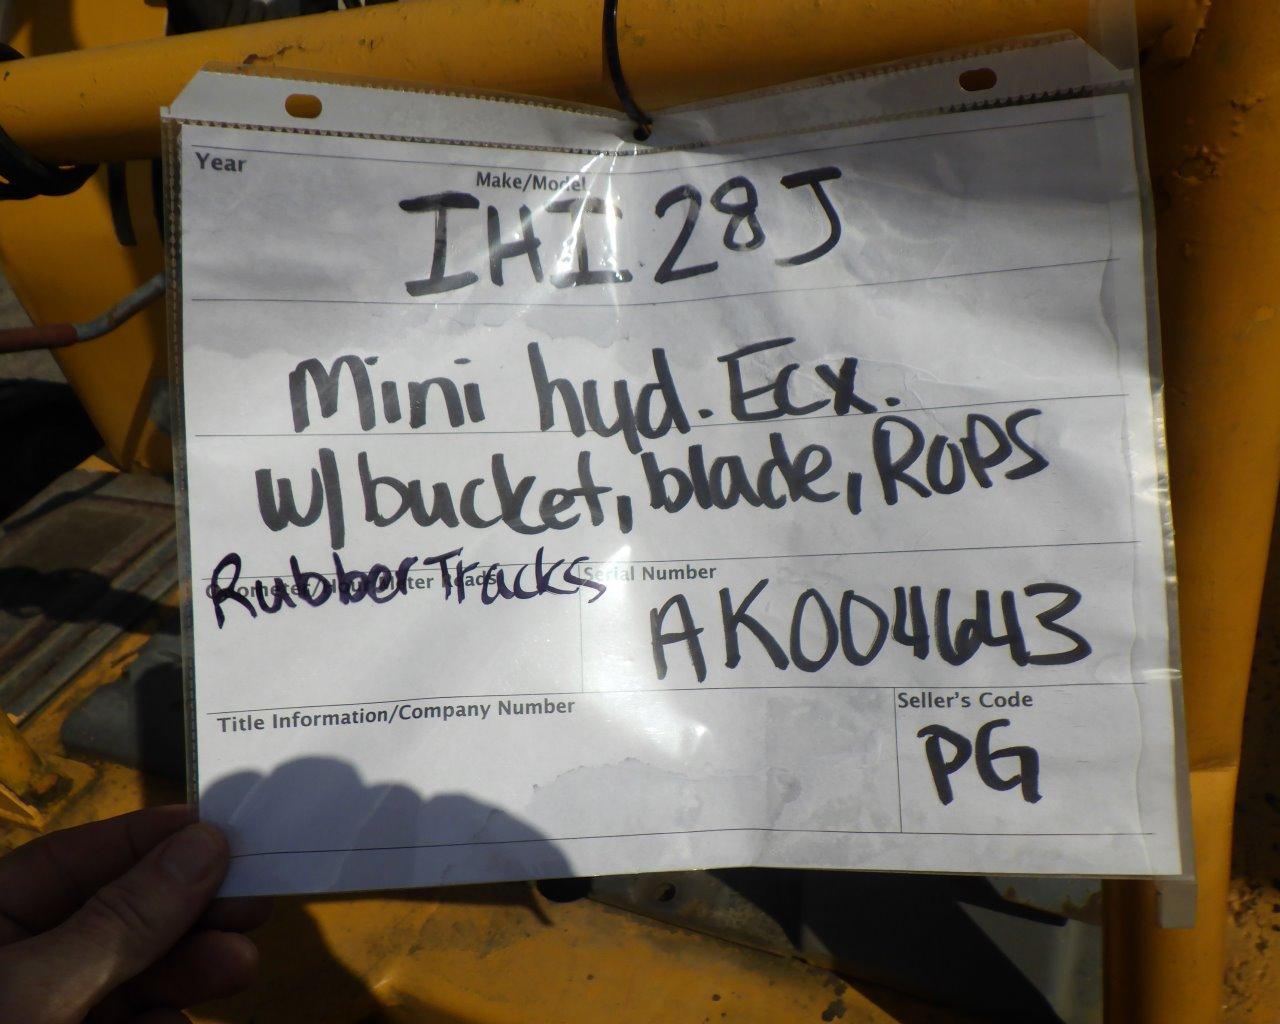 IHI 28J Hyd Excavator w/Bucket   Blade   Rops   Rubber Tracks s/n:AK004643